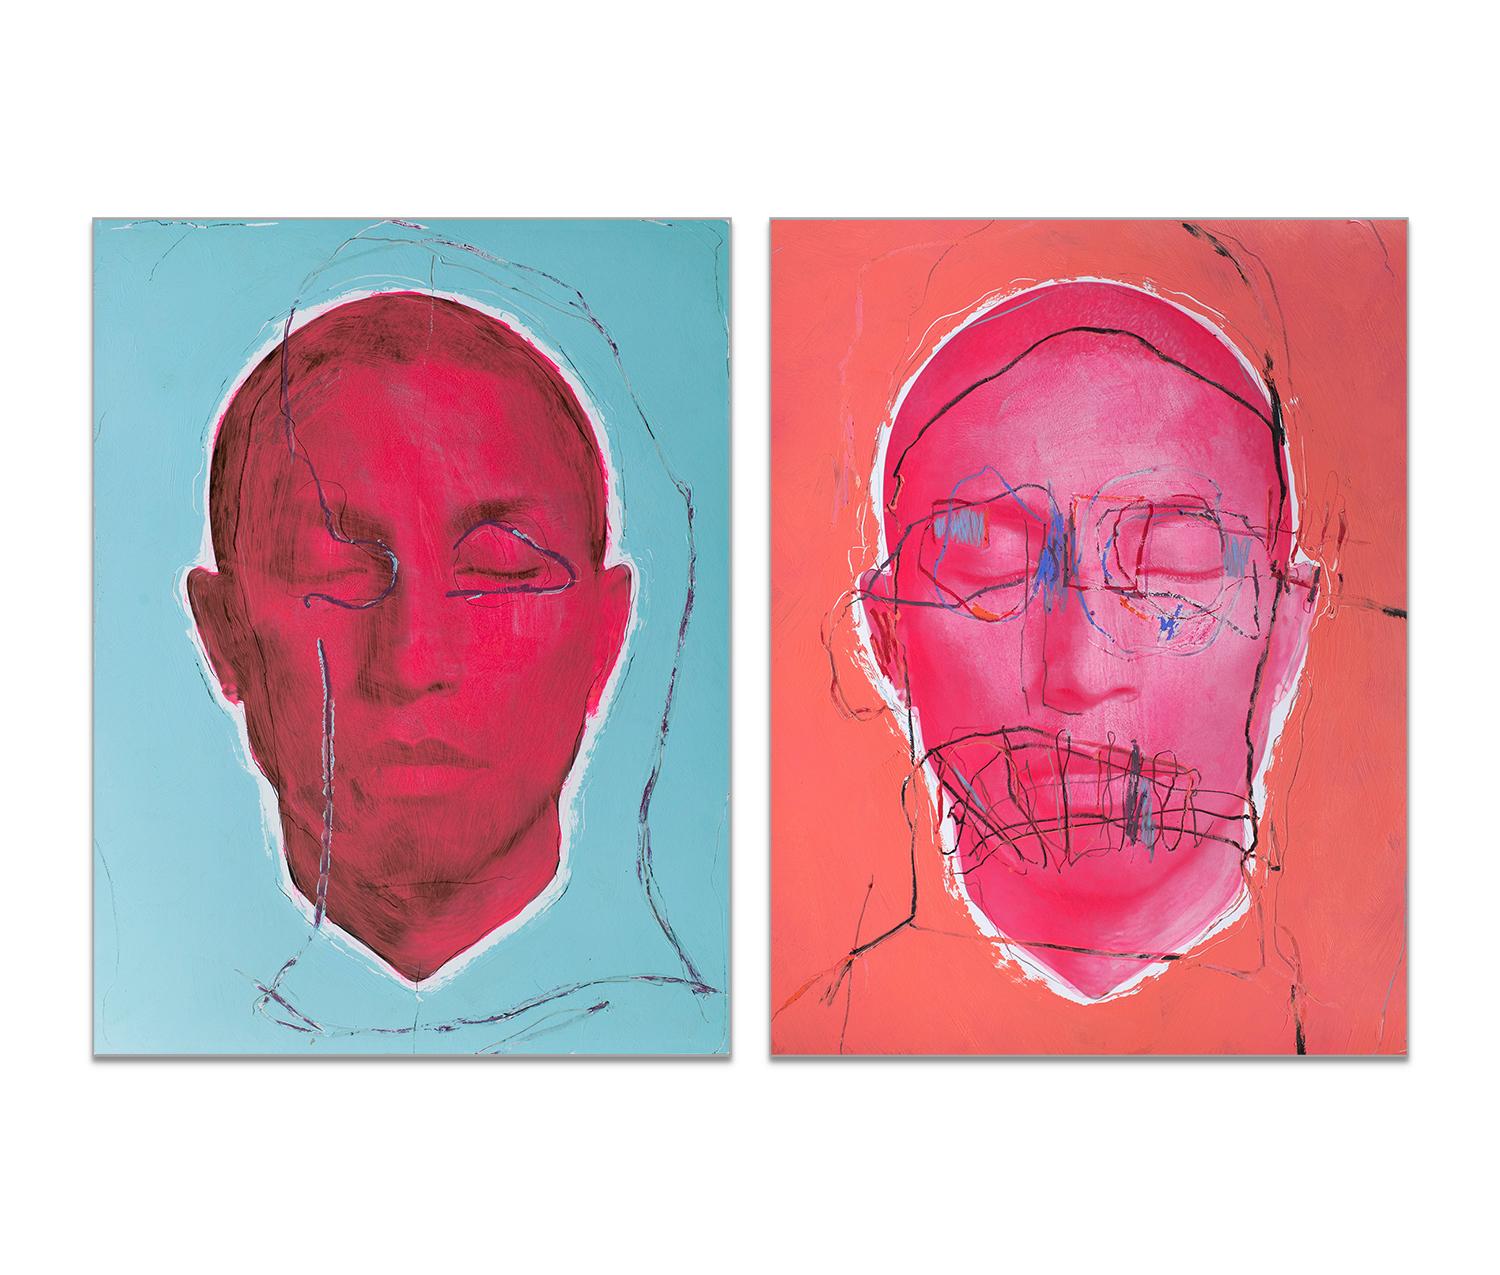 L'Éternel Recommencement &Temporaire. Pharrell Williams LIVE FOREVER - Techniques mixtes - Mixed Media Art de Hunter & Gatti